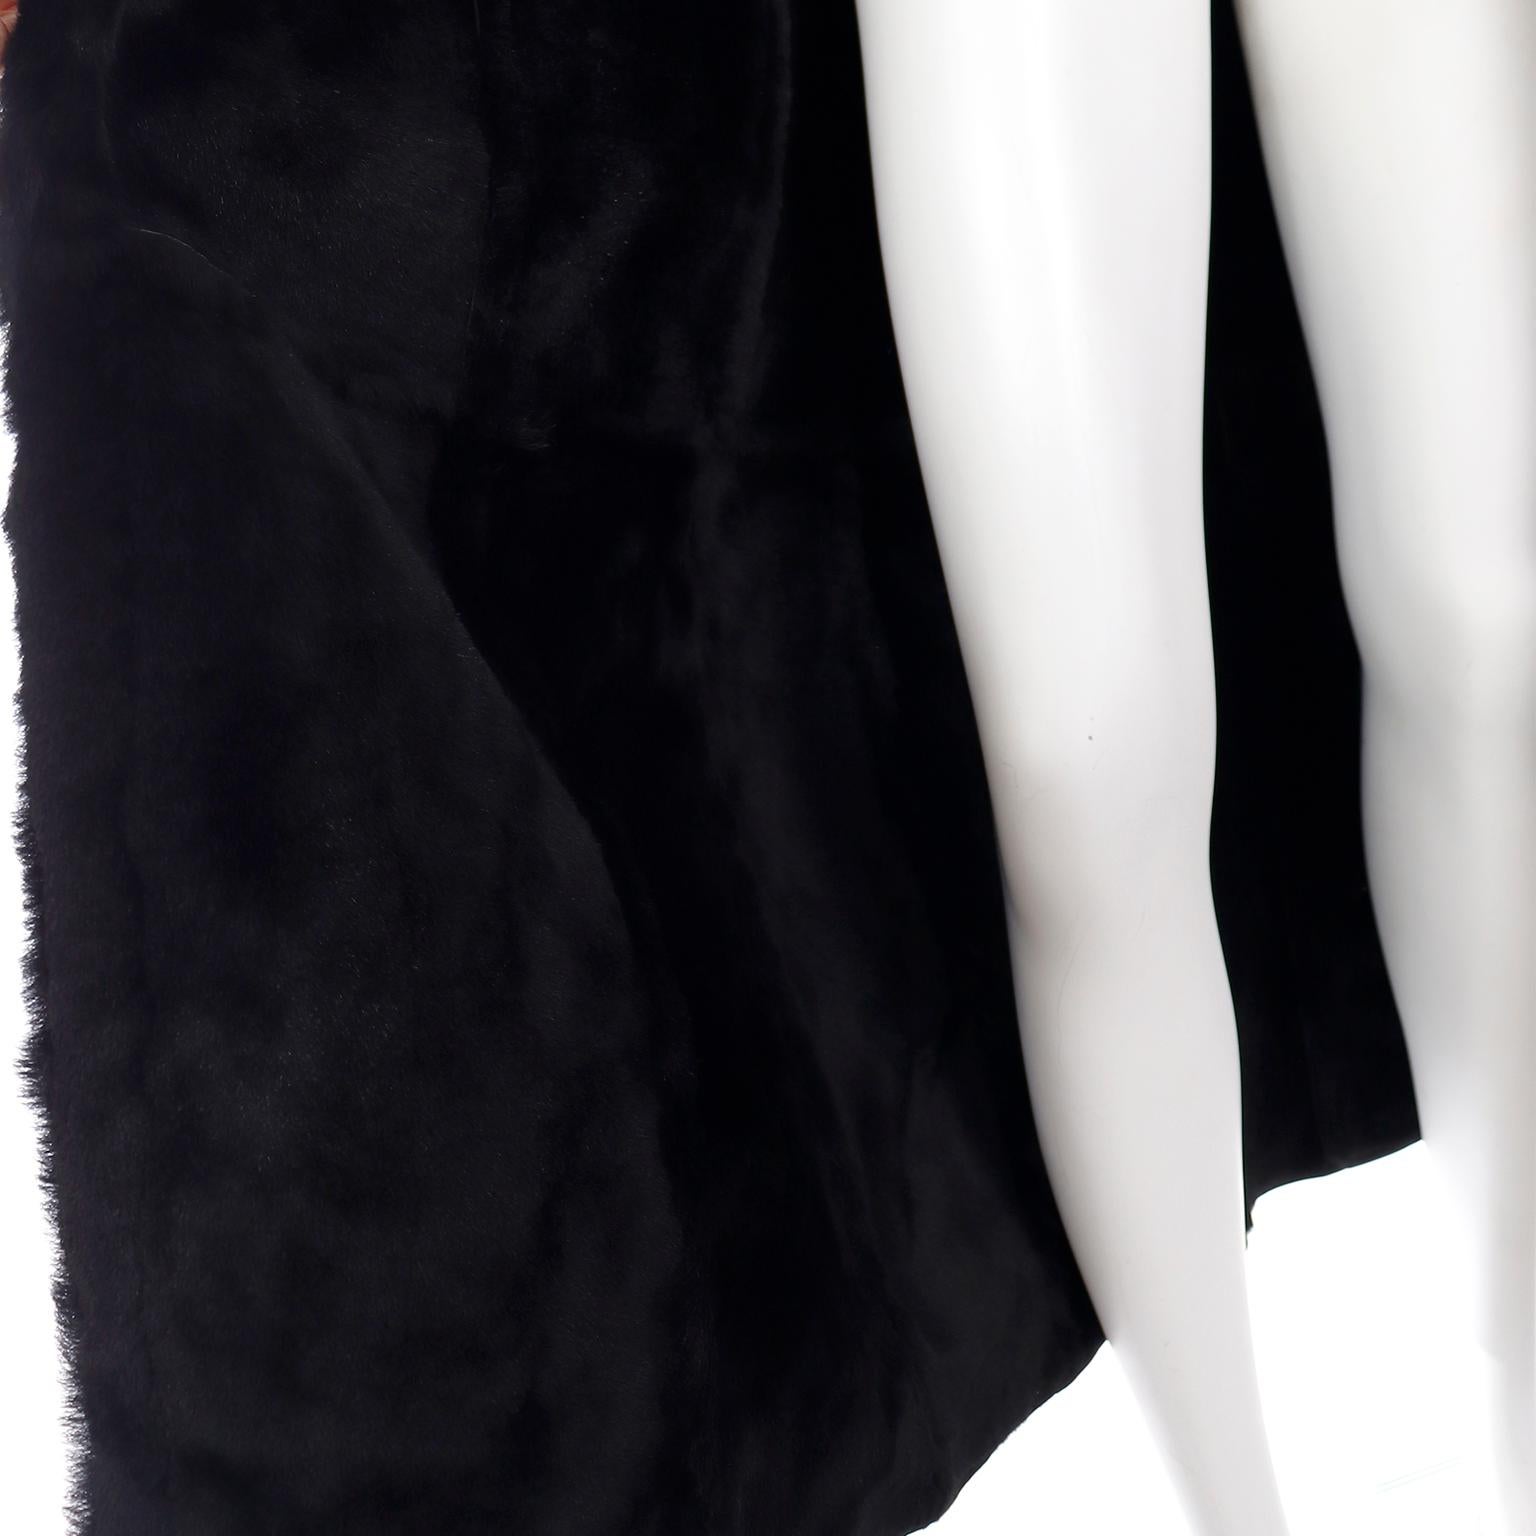 Valentino 2007 Beaded Applique Black Sheepskin Runway Coat w Mink Lining & Trim For Sale 9